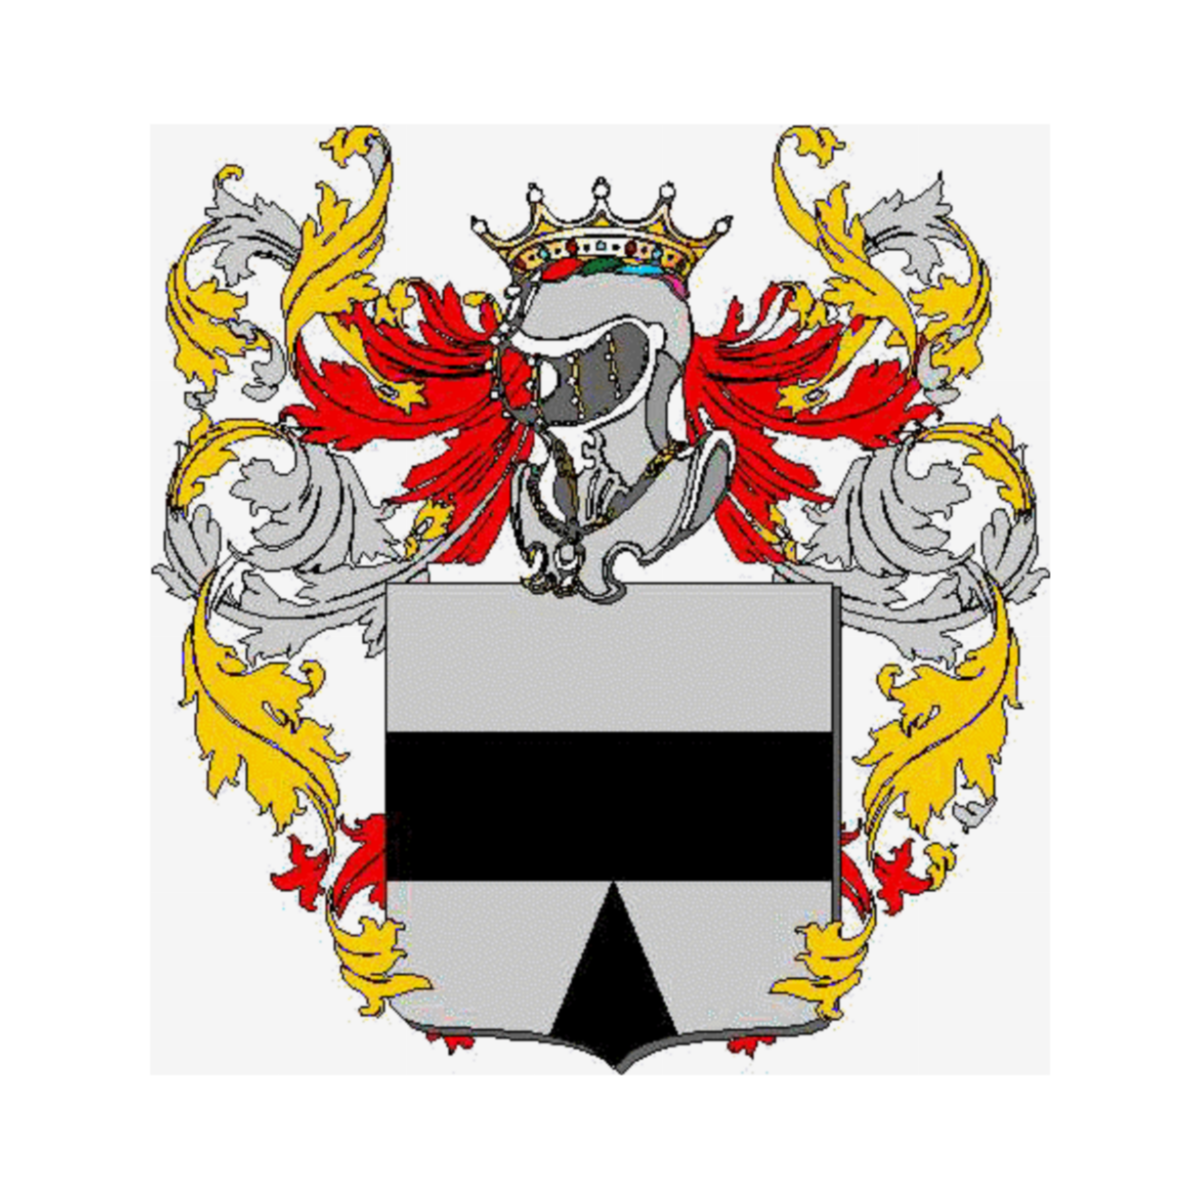 Coat of arms of family Oddi Baglioni